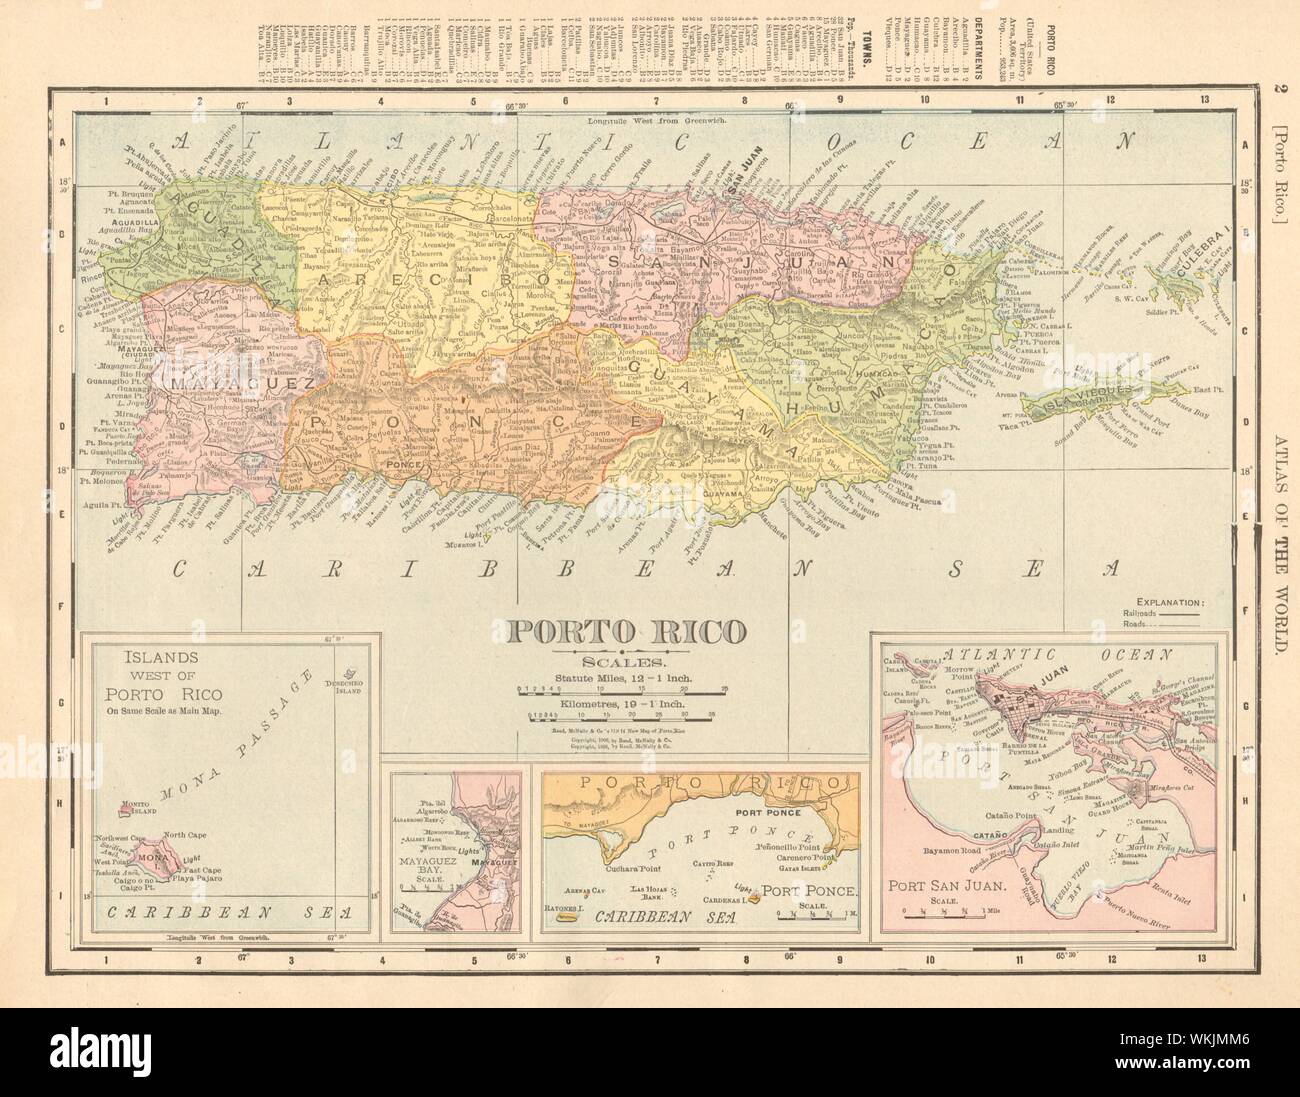 PUERTO RICO. Inset Port San Juan. RAND MCNALLY 1906 old antique map plan chart Stock Photo